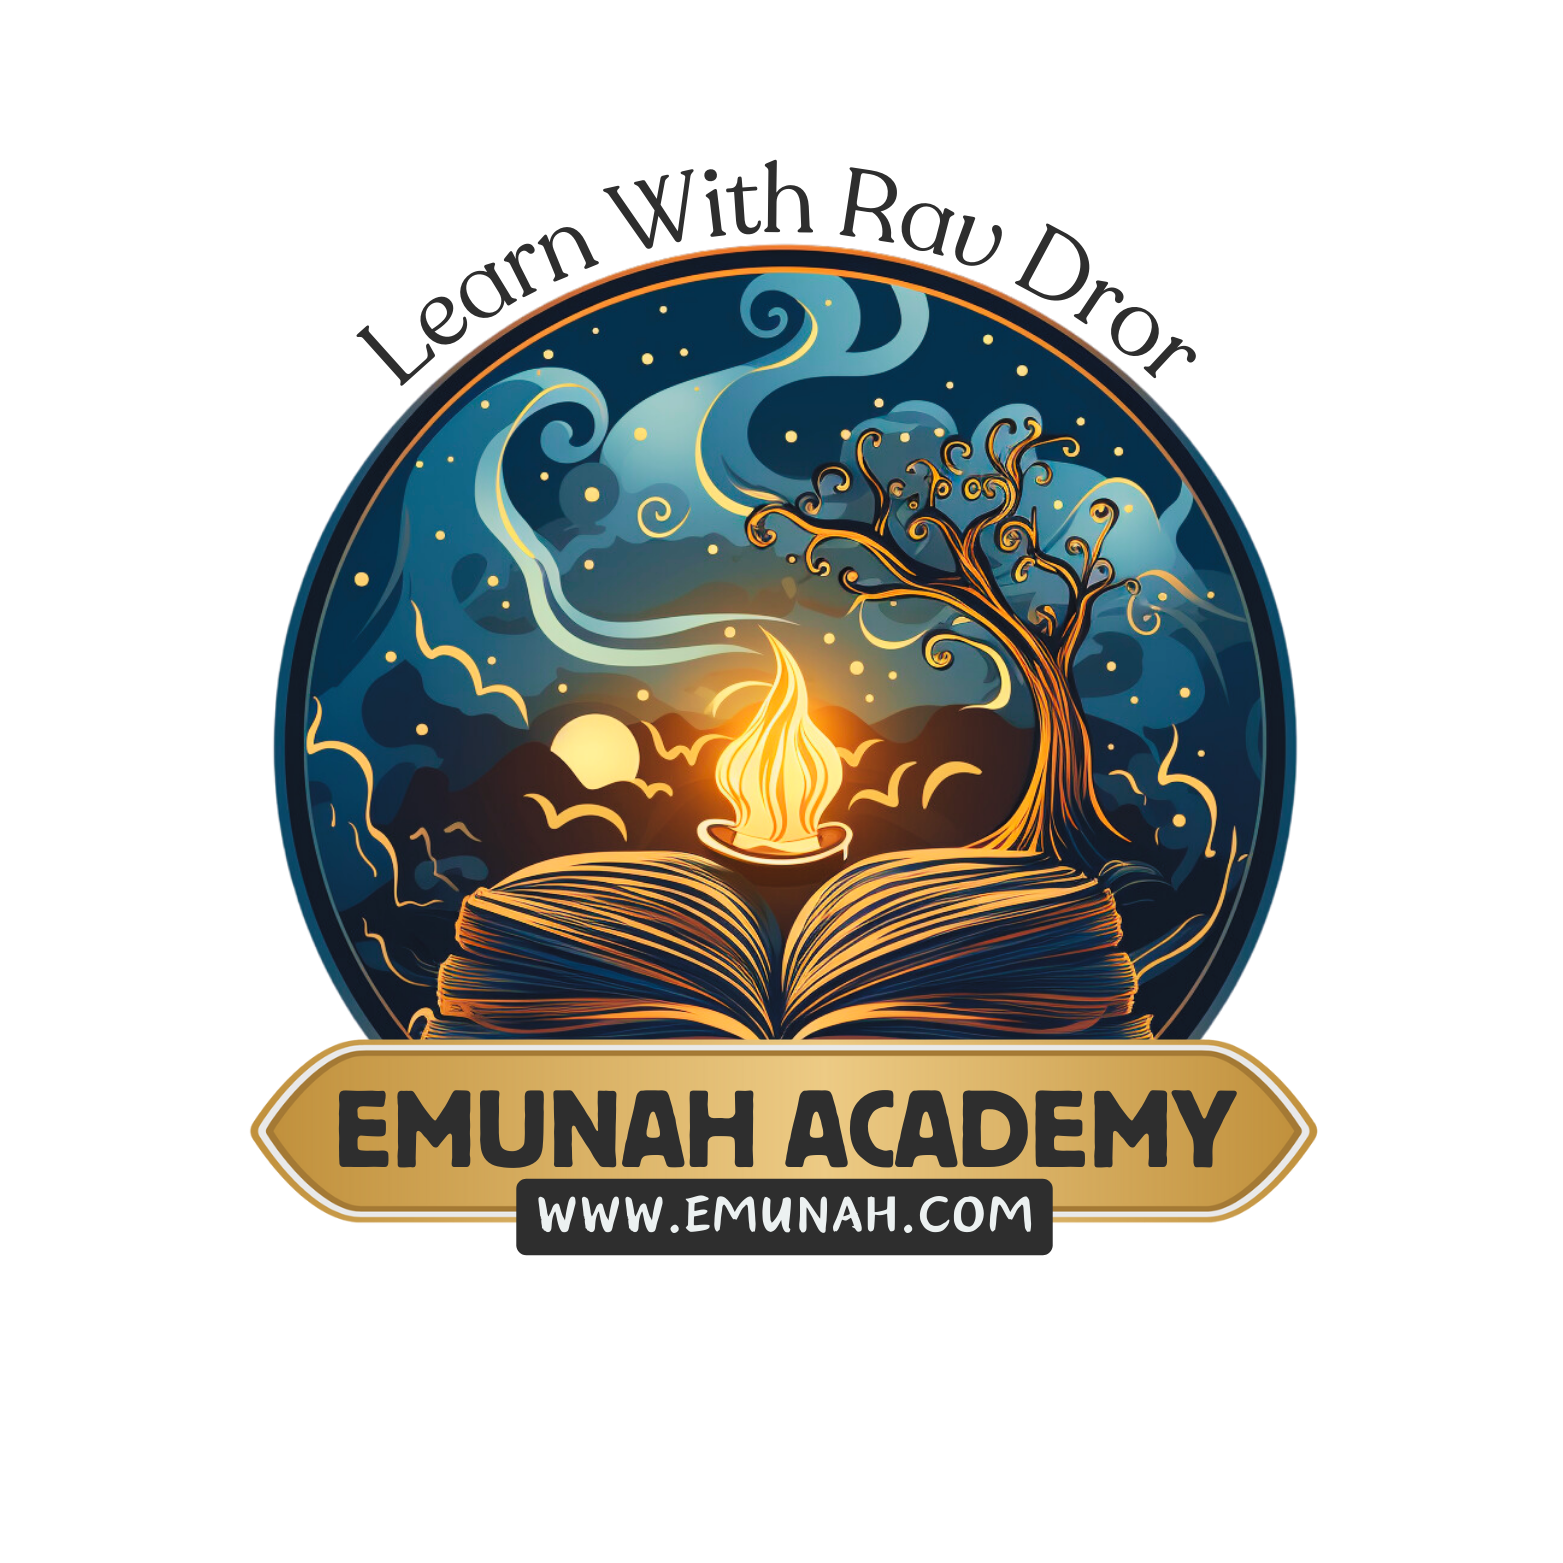 Emunah Academy